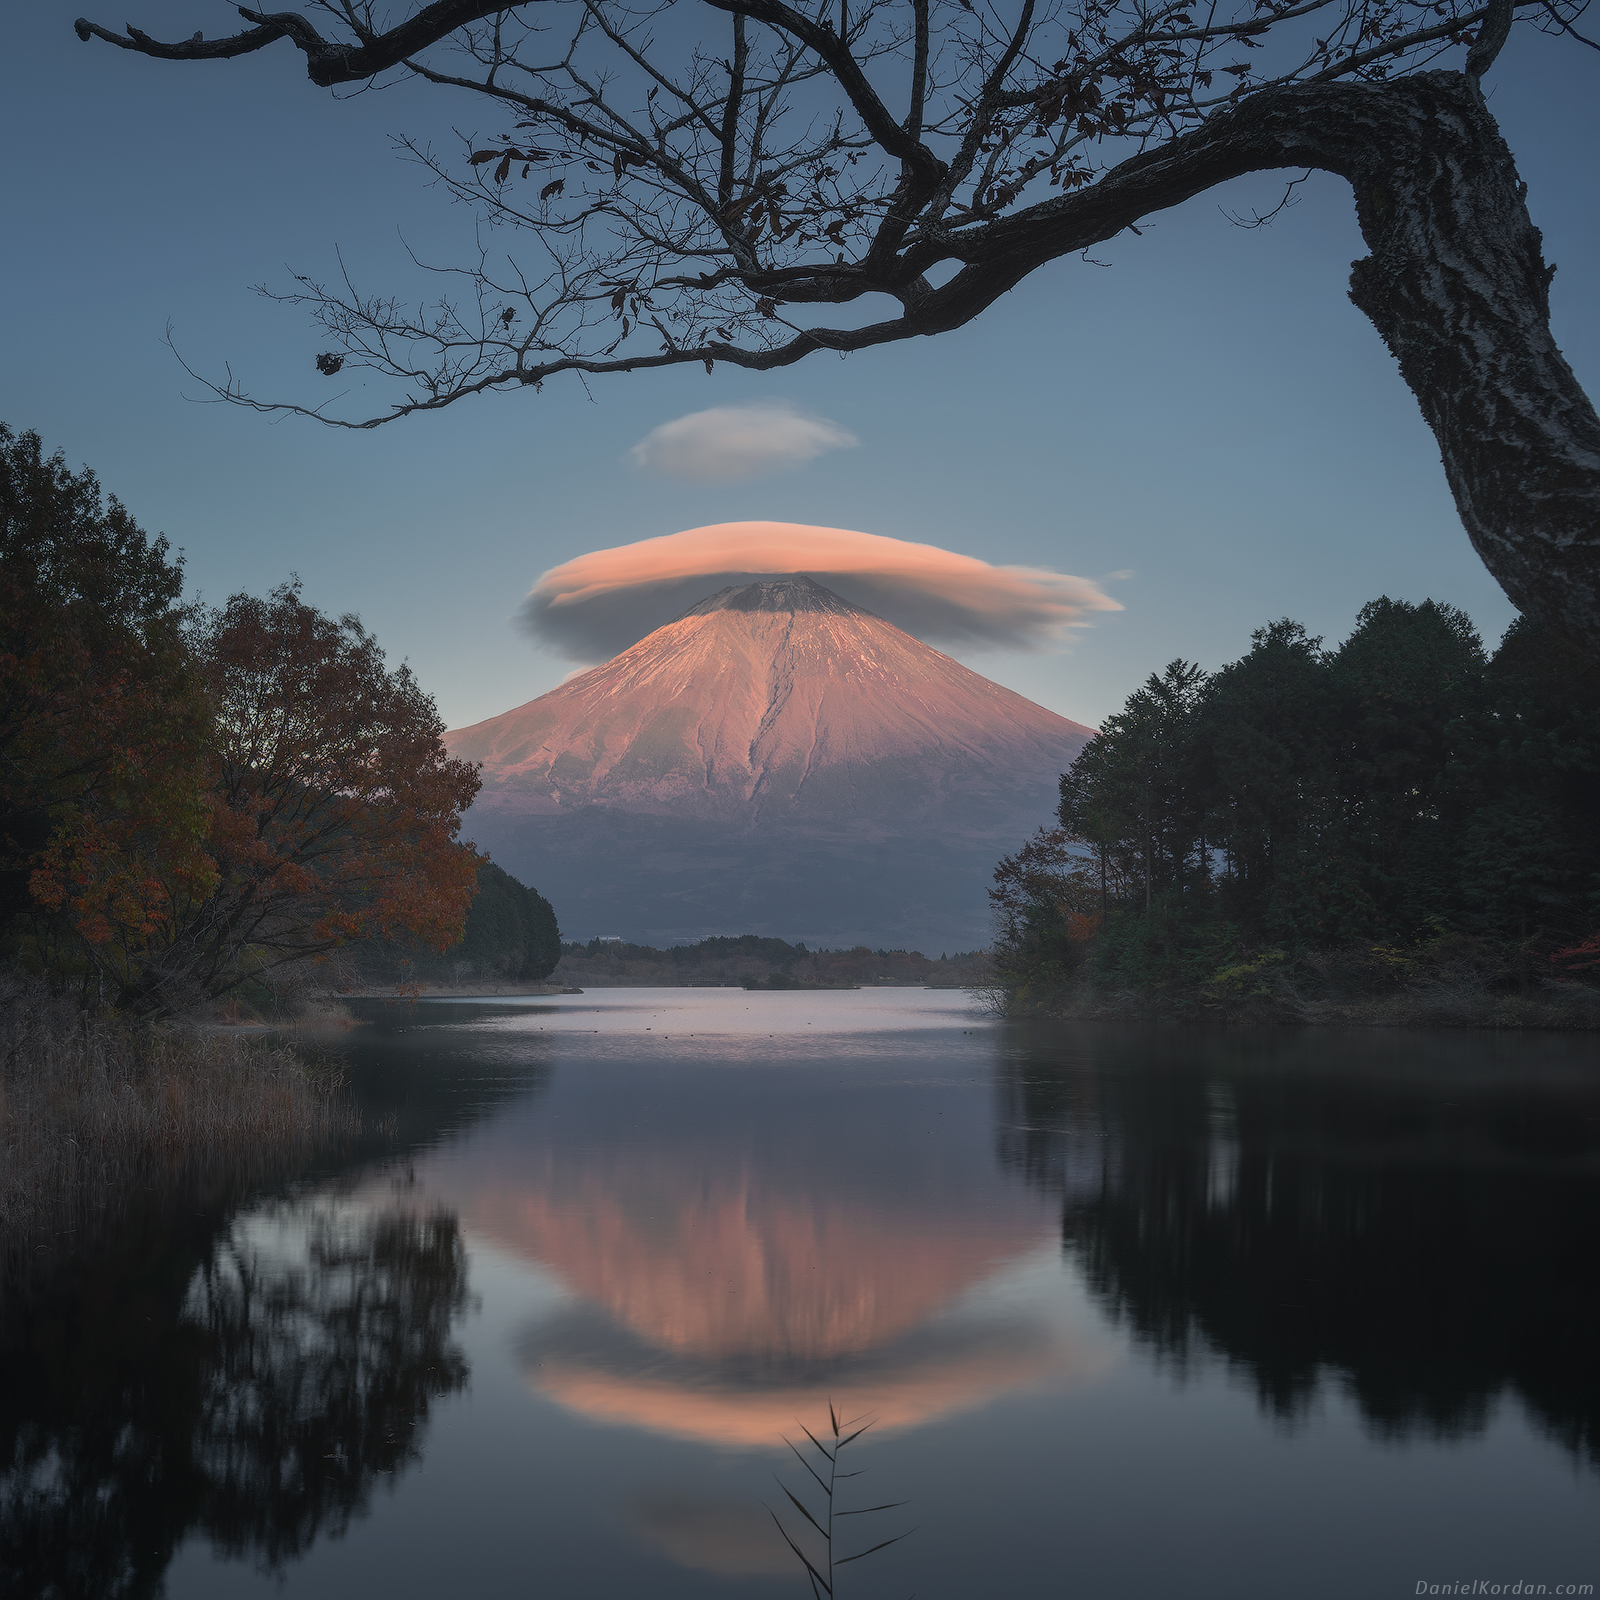 General 1600x1600 Daniel Kordan landscape sky clouds mountains reflection water nature trees Japan Mount Fuji